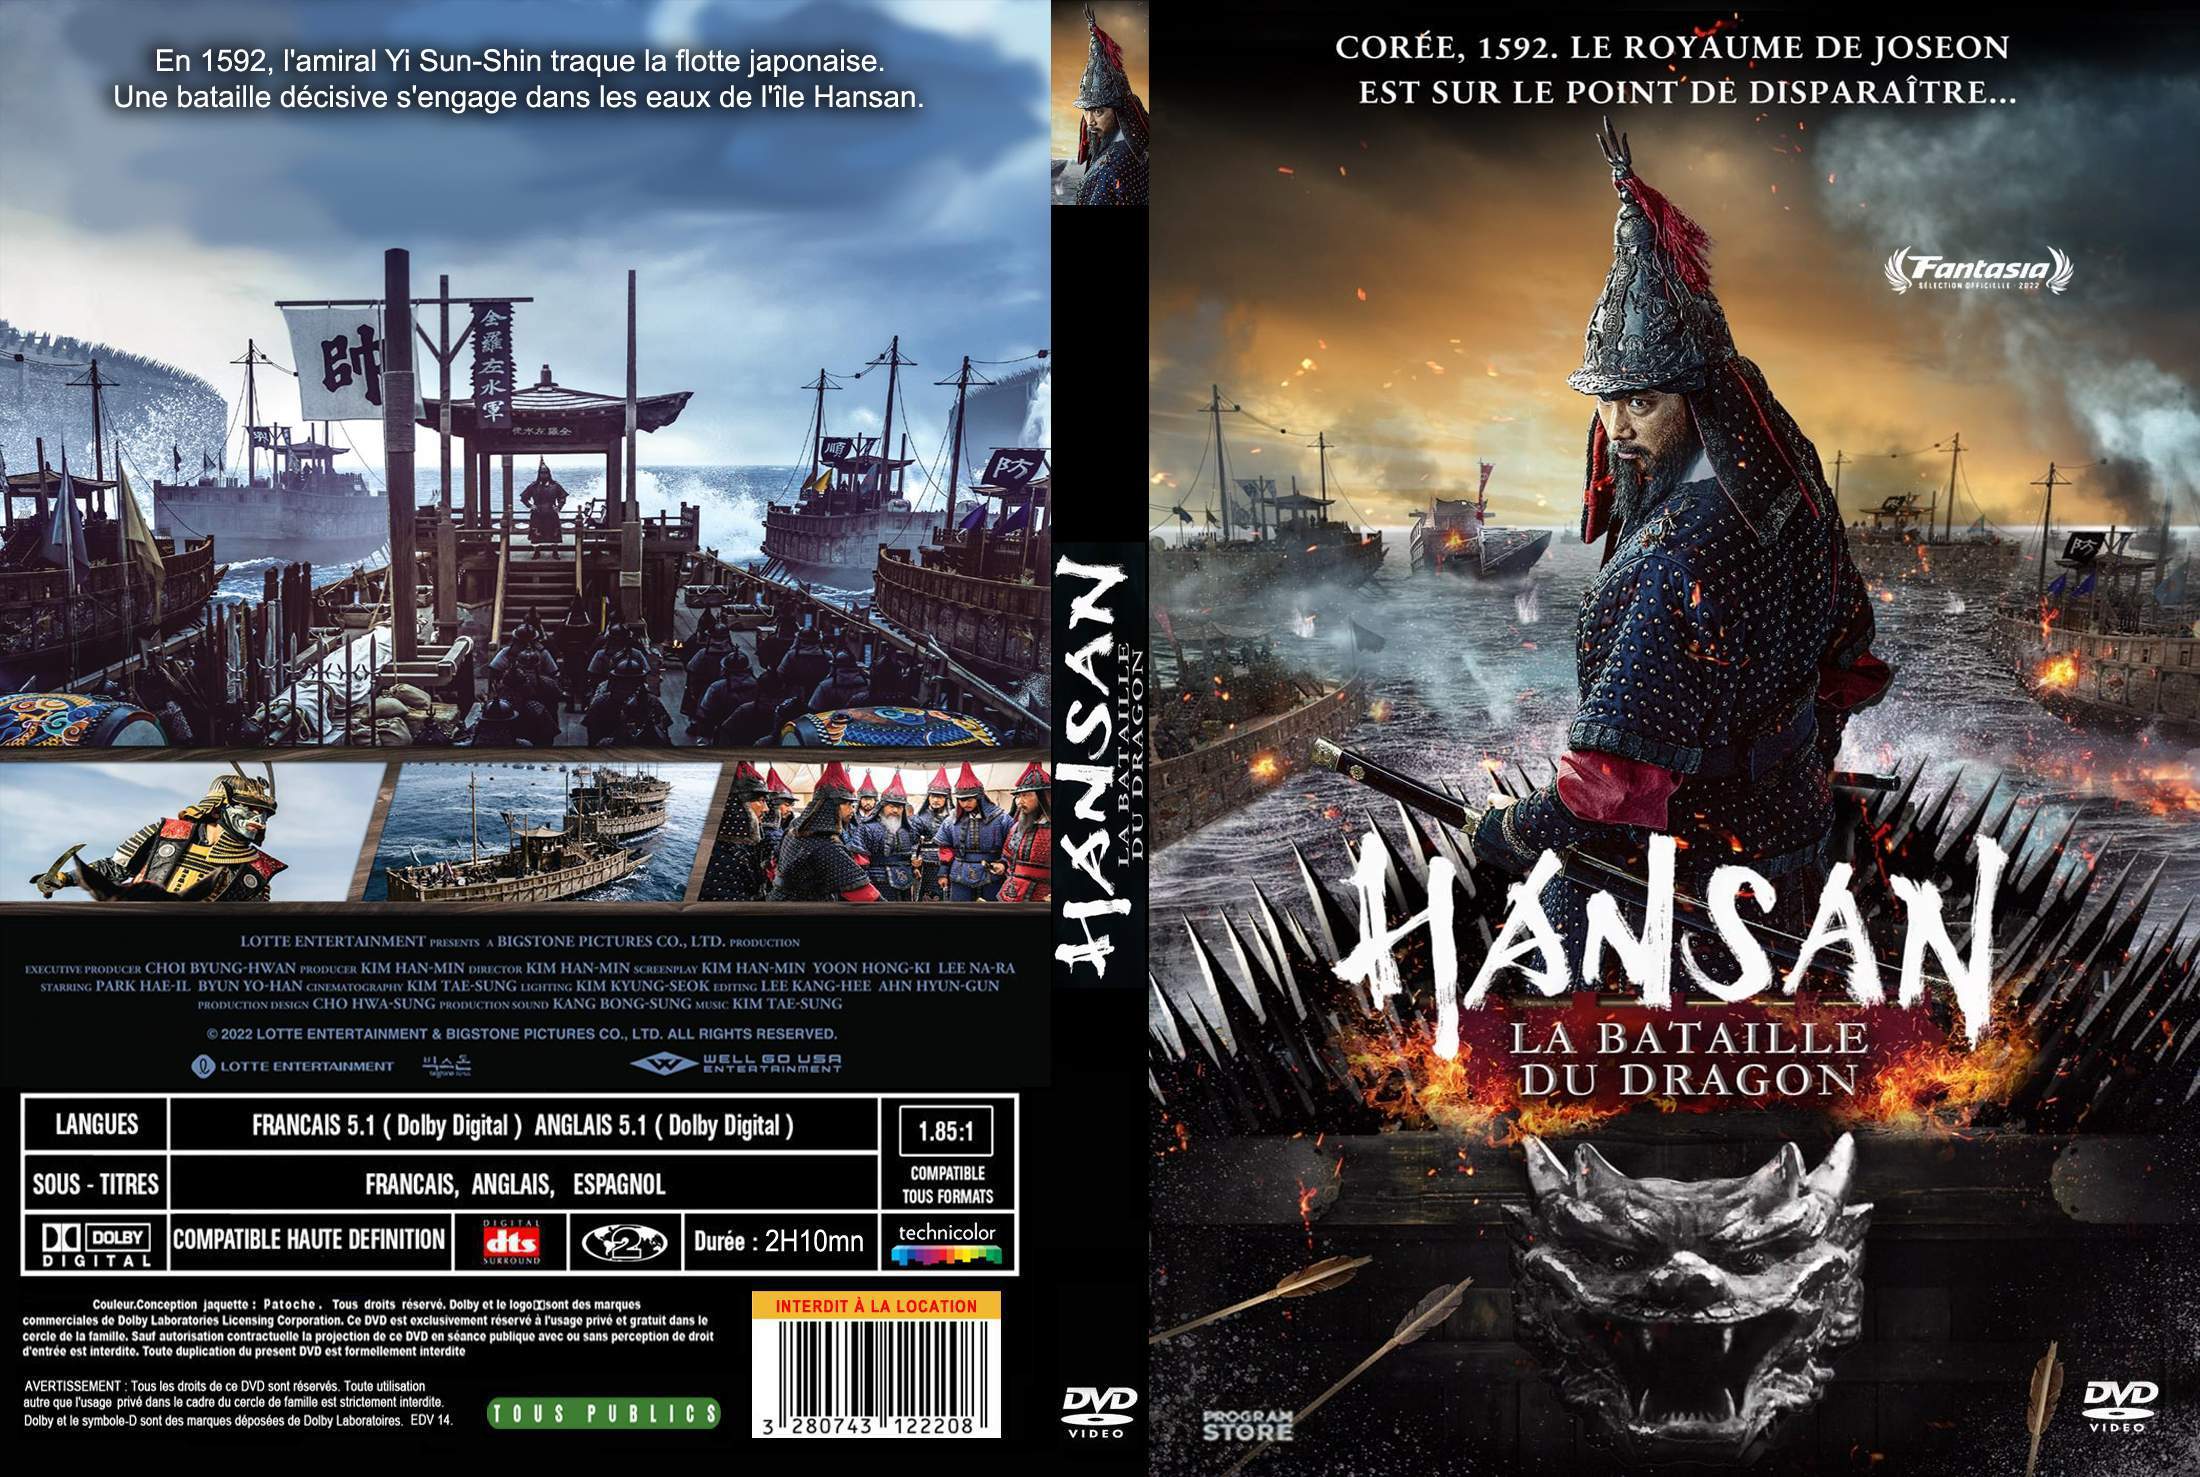 Jaquette DVD Hansan custom